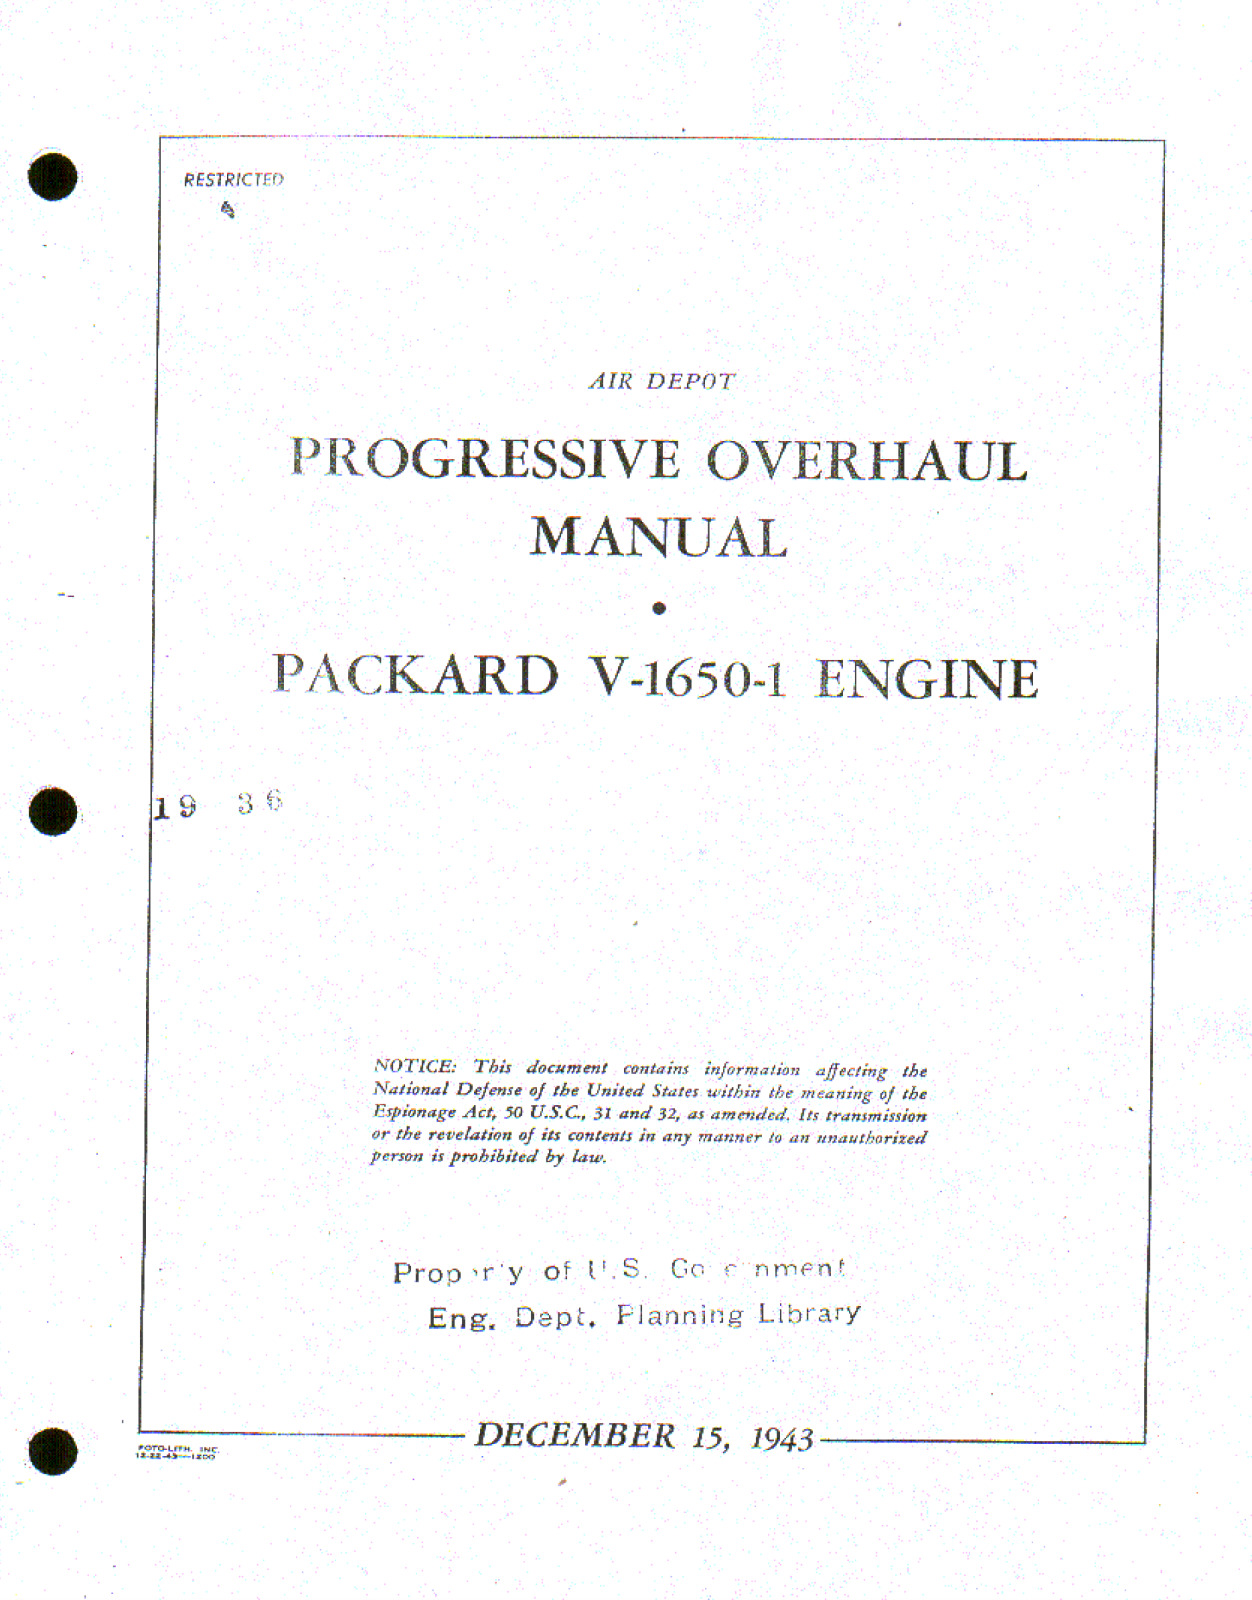 120 Page Air Depot Progressive Overhaul Manual Packard V-1650-1 Engine on CD